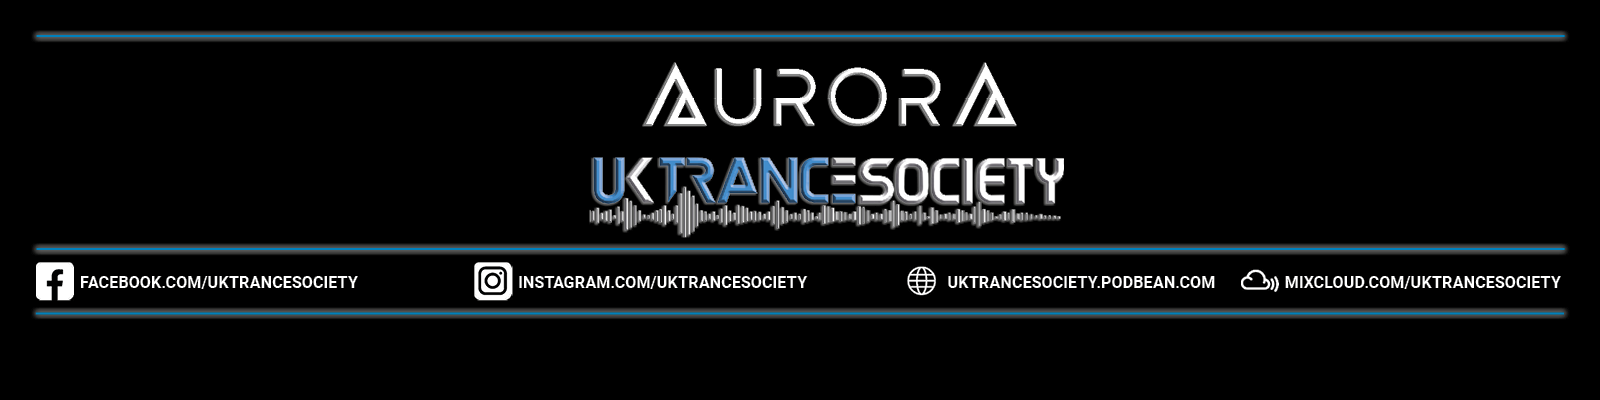 UK Trance Society Podcast